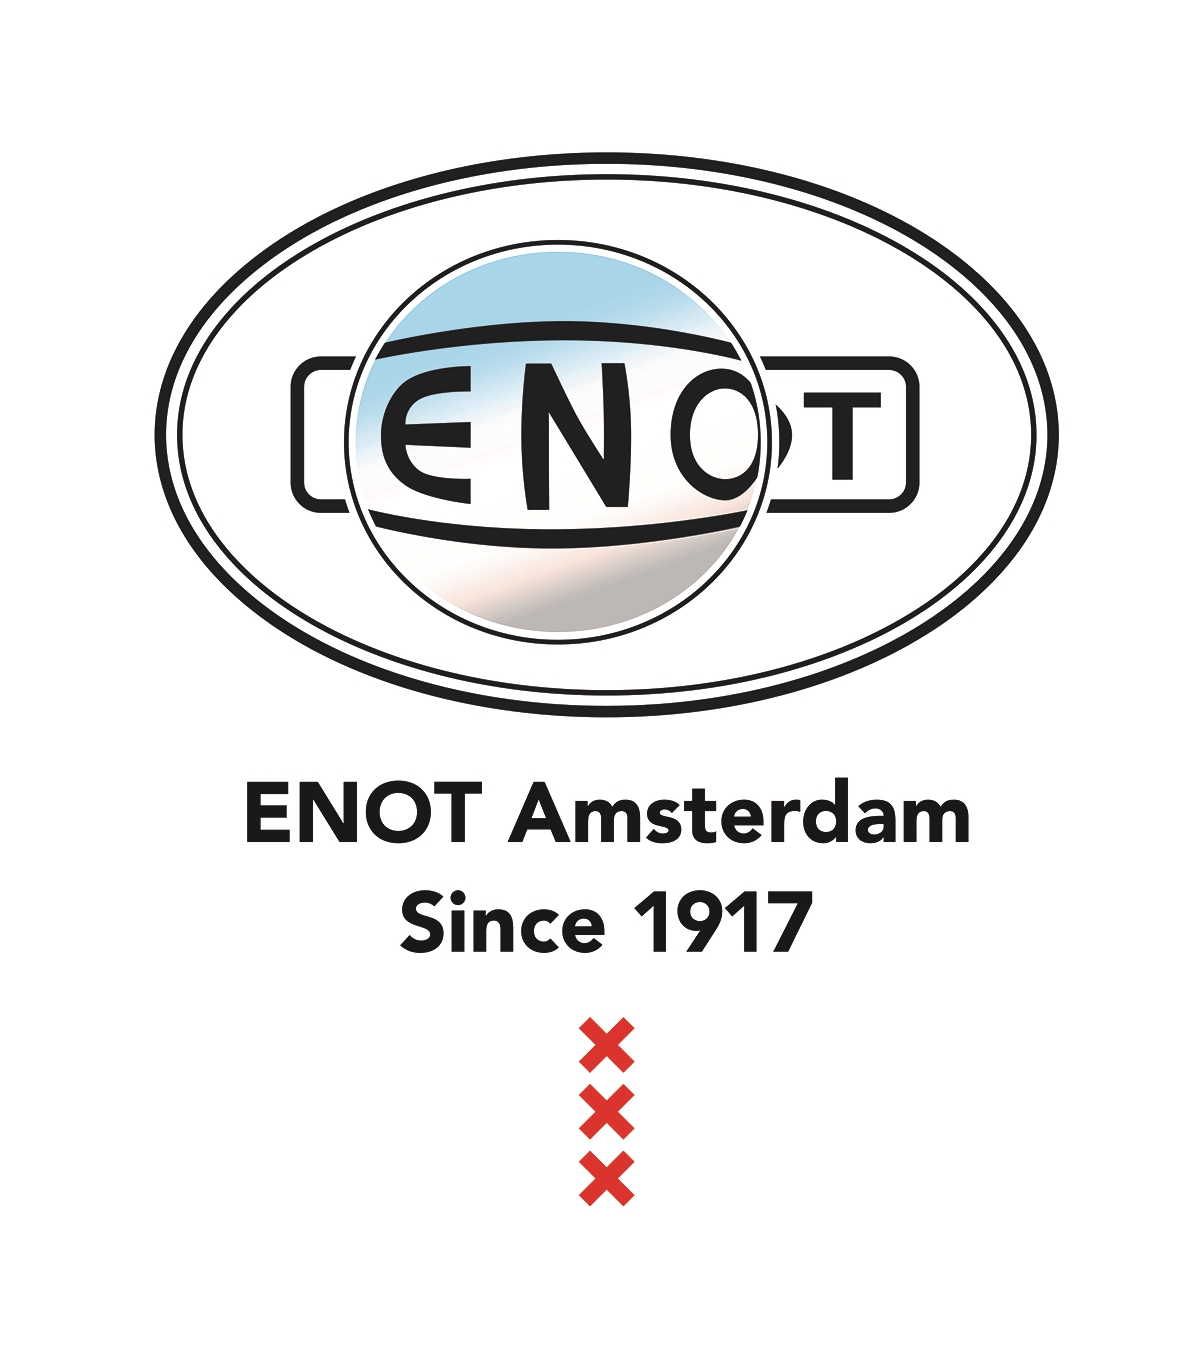 ENOT XXX logo kleur 2.jpg